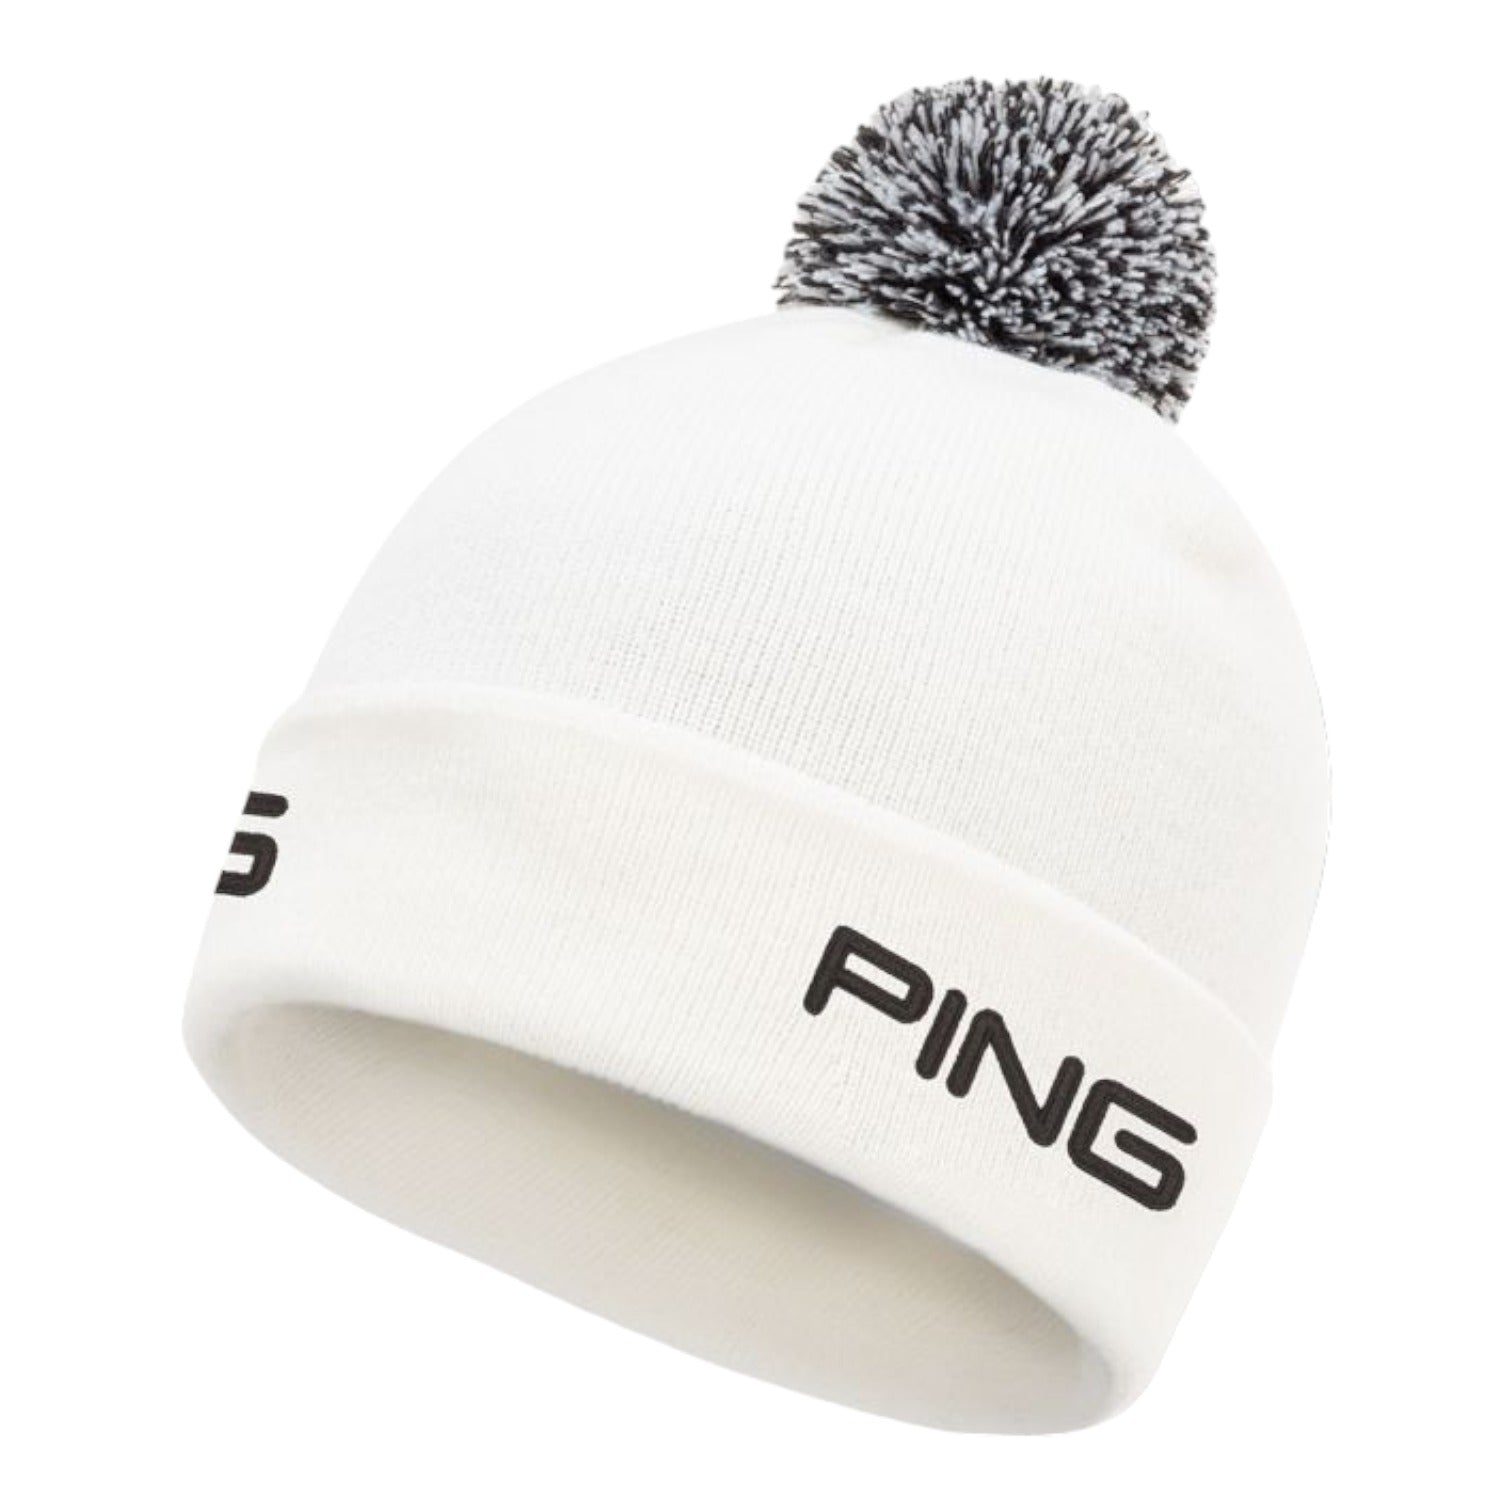 Ping SensorWarm Cresting Knit Bobble Golf Hat P03469